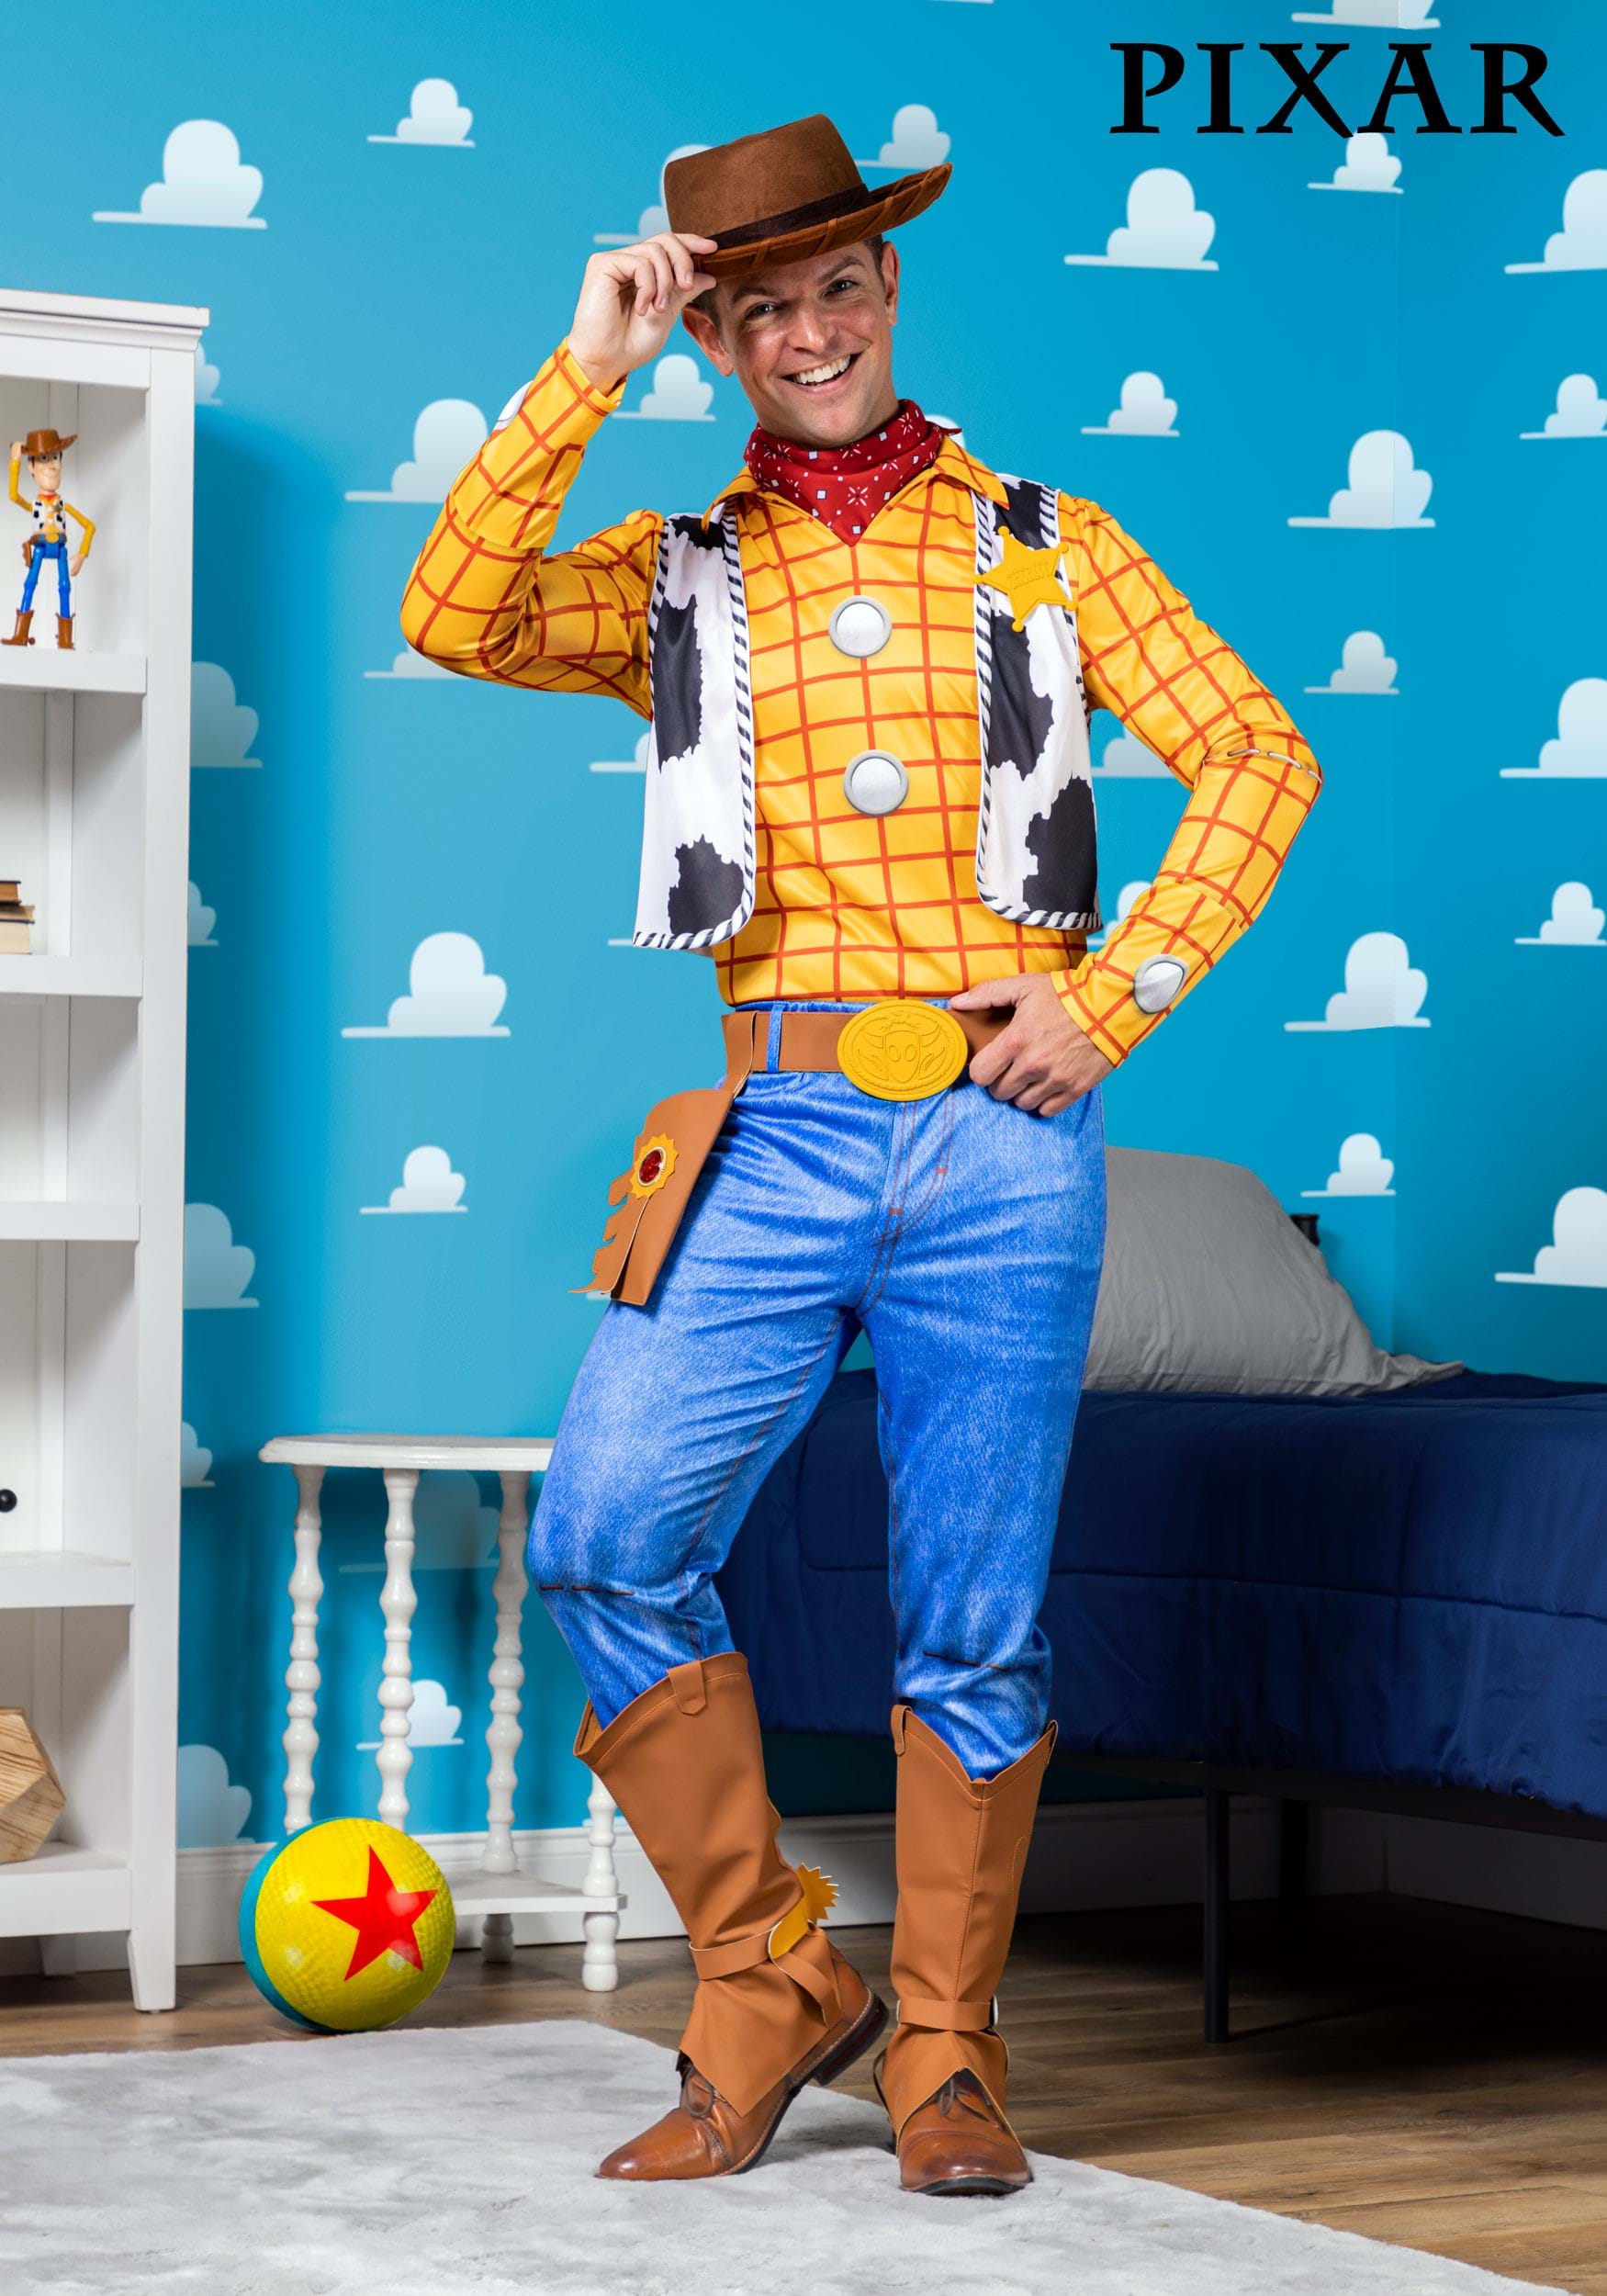 Jessie cosplay adult costume , Toy Story, Woody, Buzz Lightyear